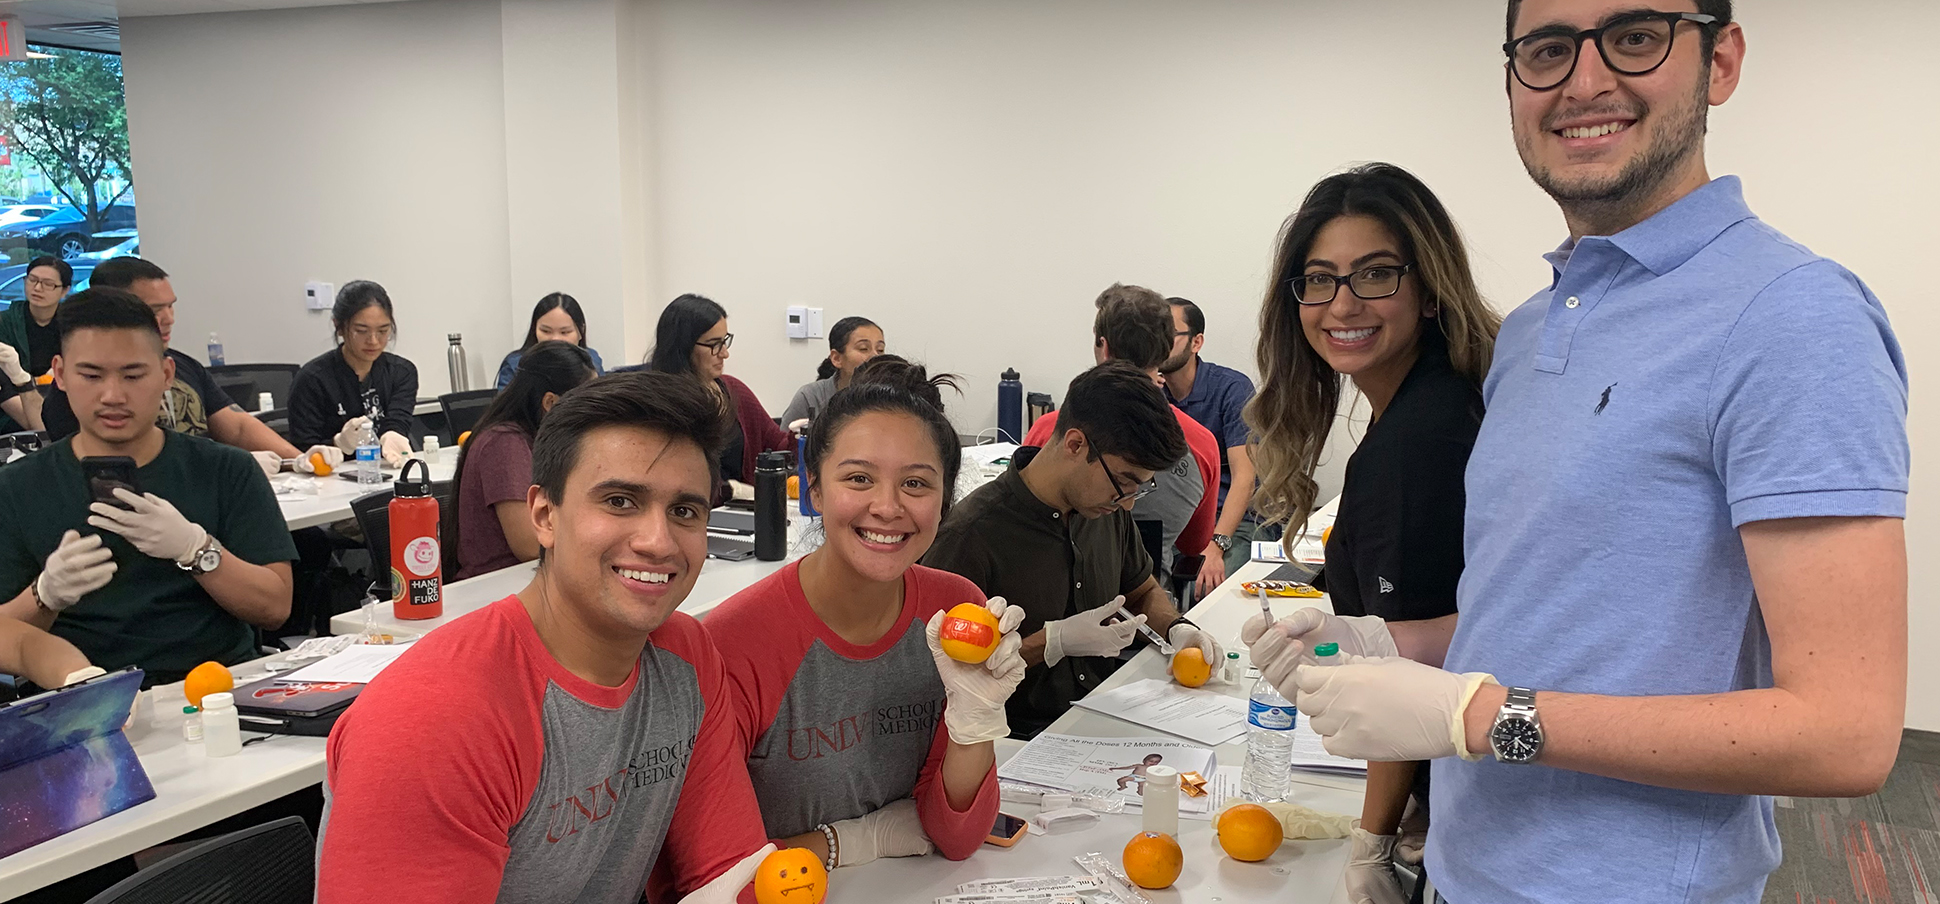 Medical students training on immunizations with oranges